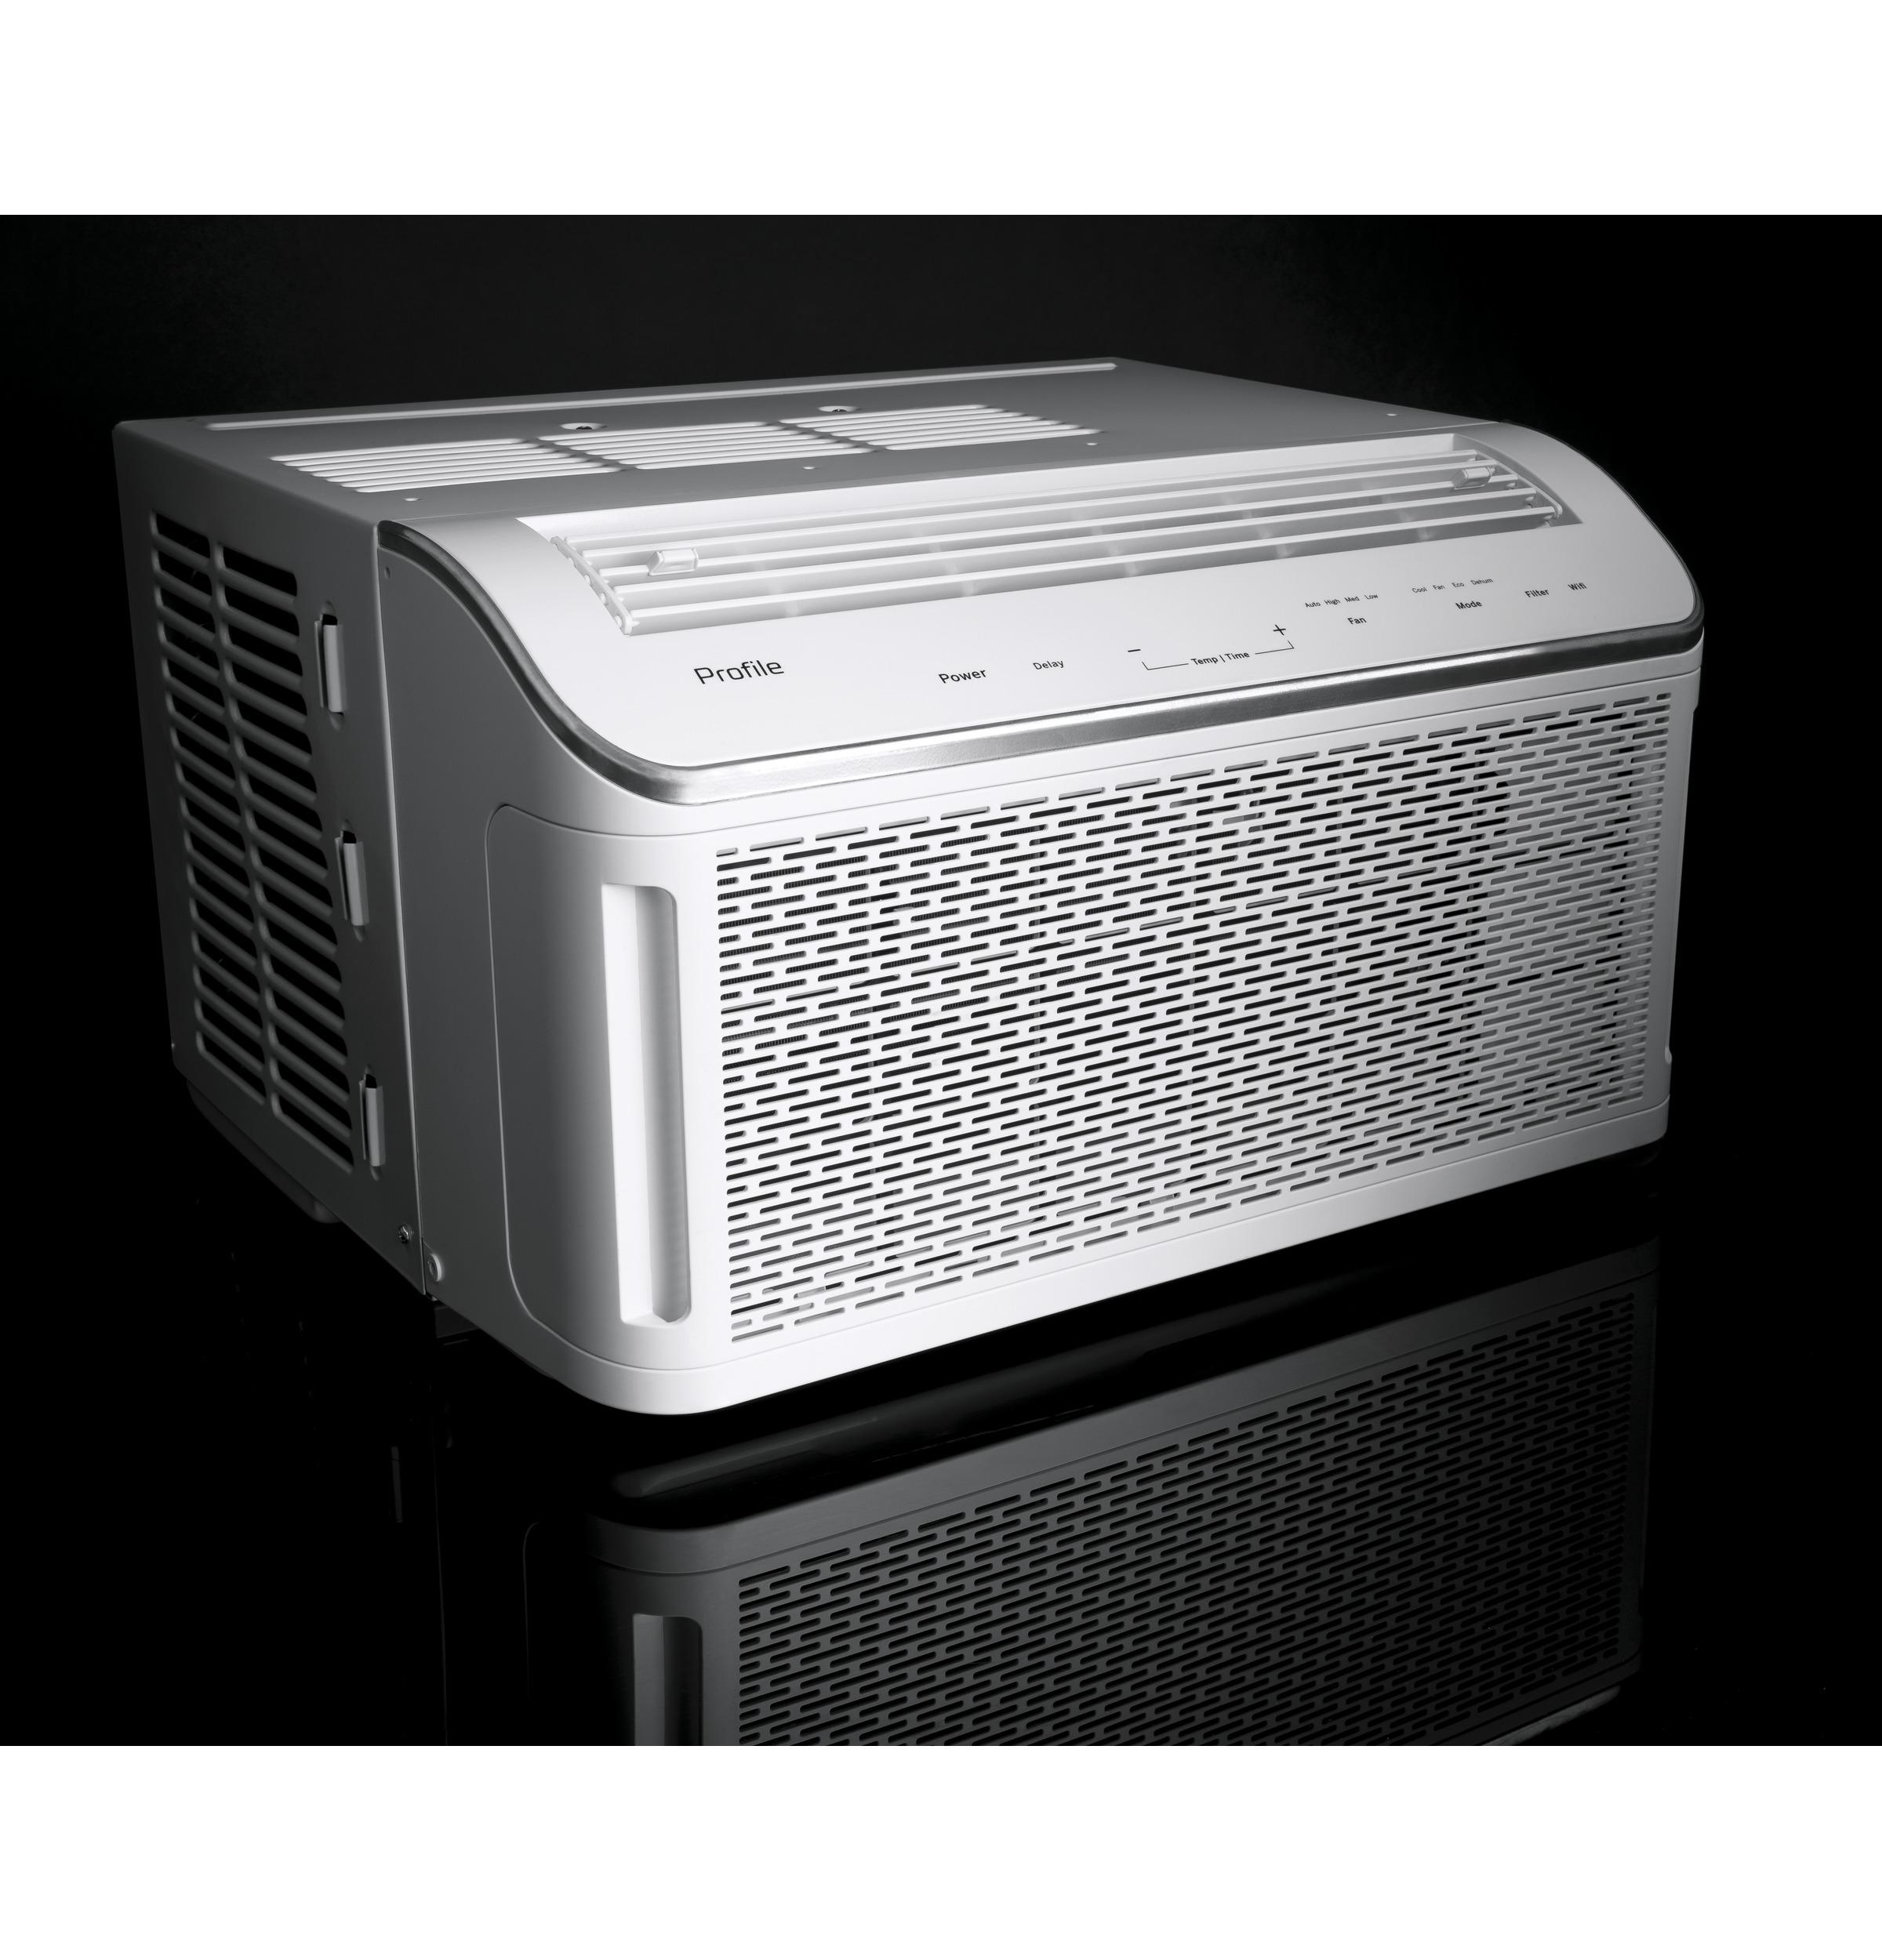 GE Profile™ 8,200 BTU Smart Ultra Quiet Window Air Conditioner for Medium Rooms up to 350 sq. ft.